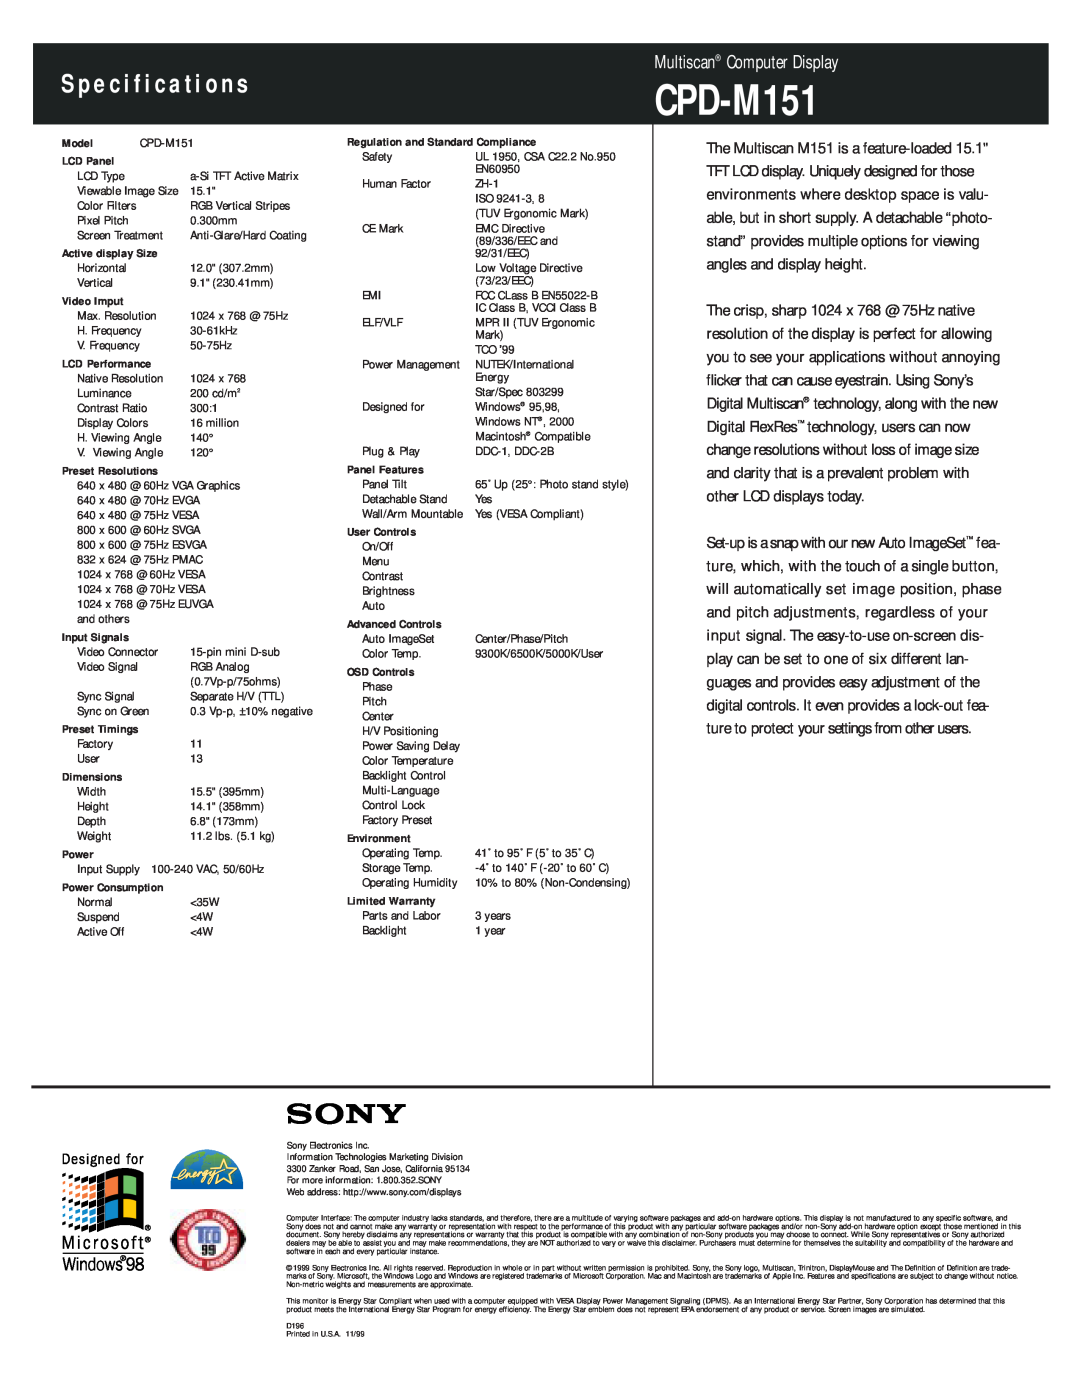 Sony CPD-M151 manual S p e c i f i c a t i o n s, Multiscan Computer Display 